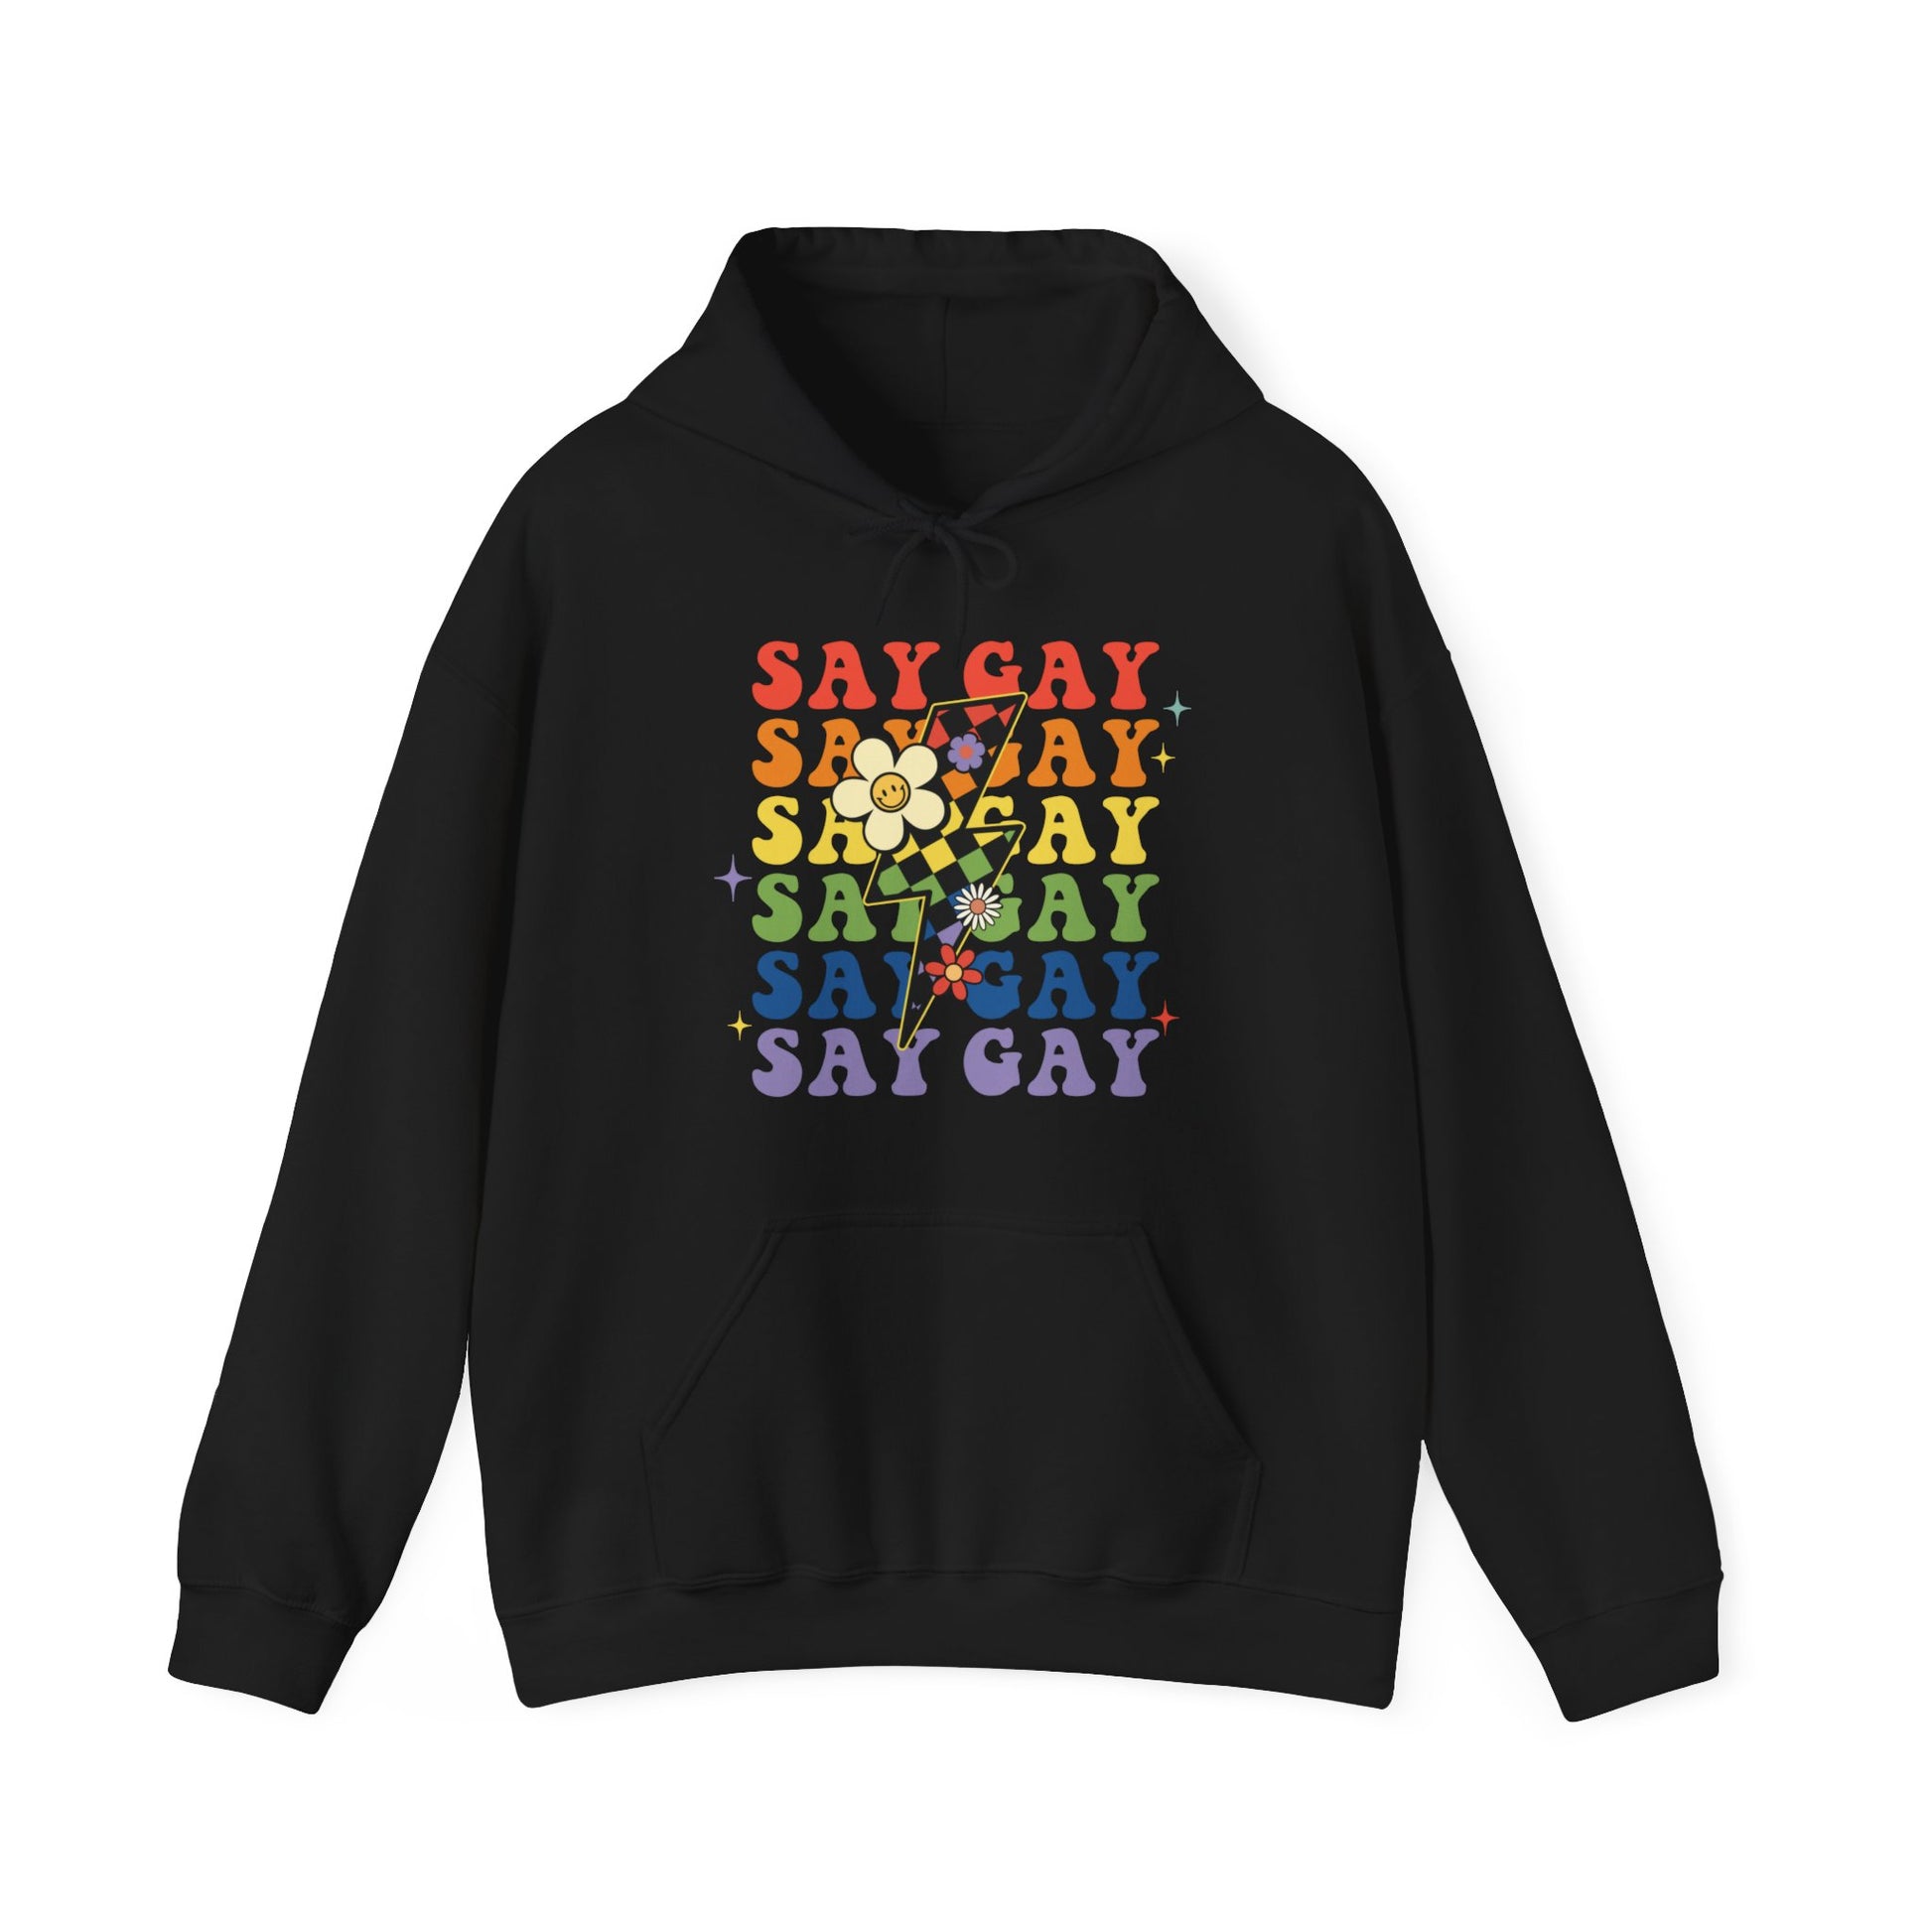 Say Gay Hoodie - Equality Trading Post 